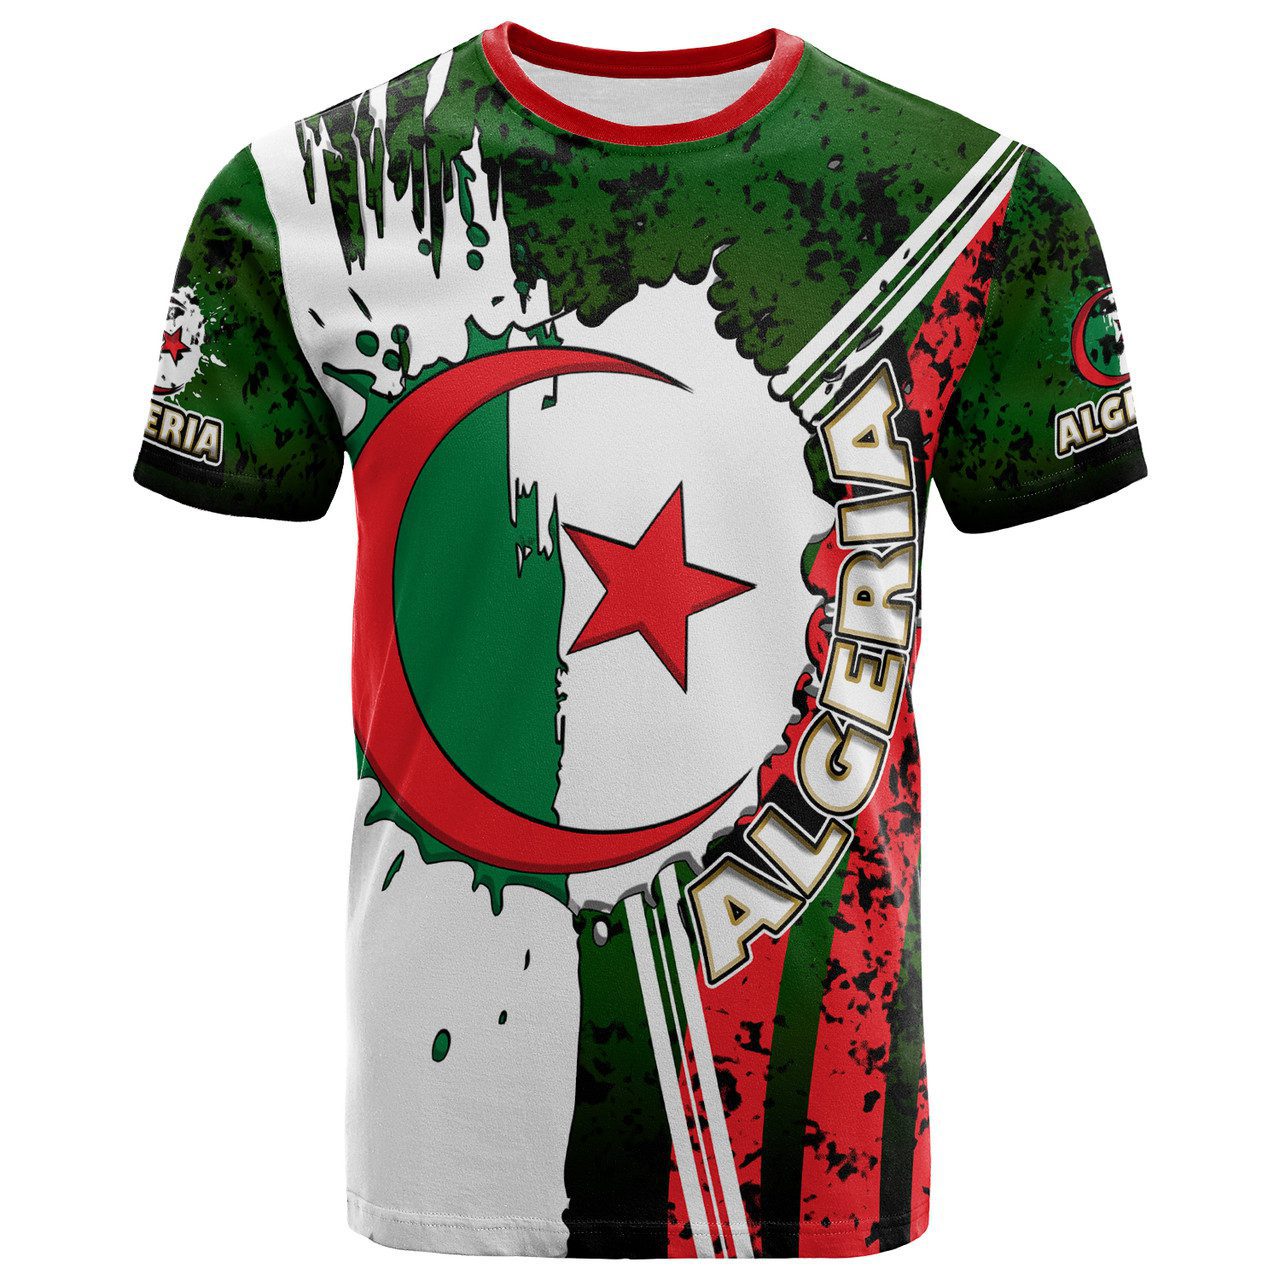 Algeria T-Shirt – Custom Algeria Independence Day T-Shirt